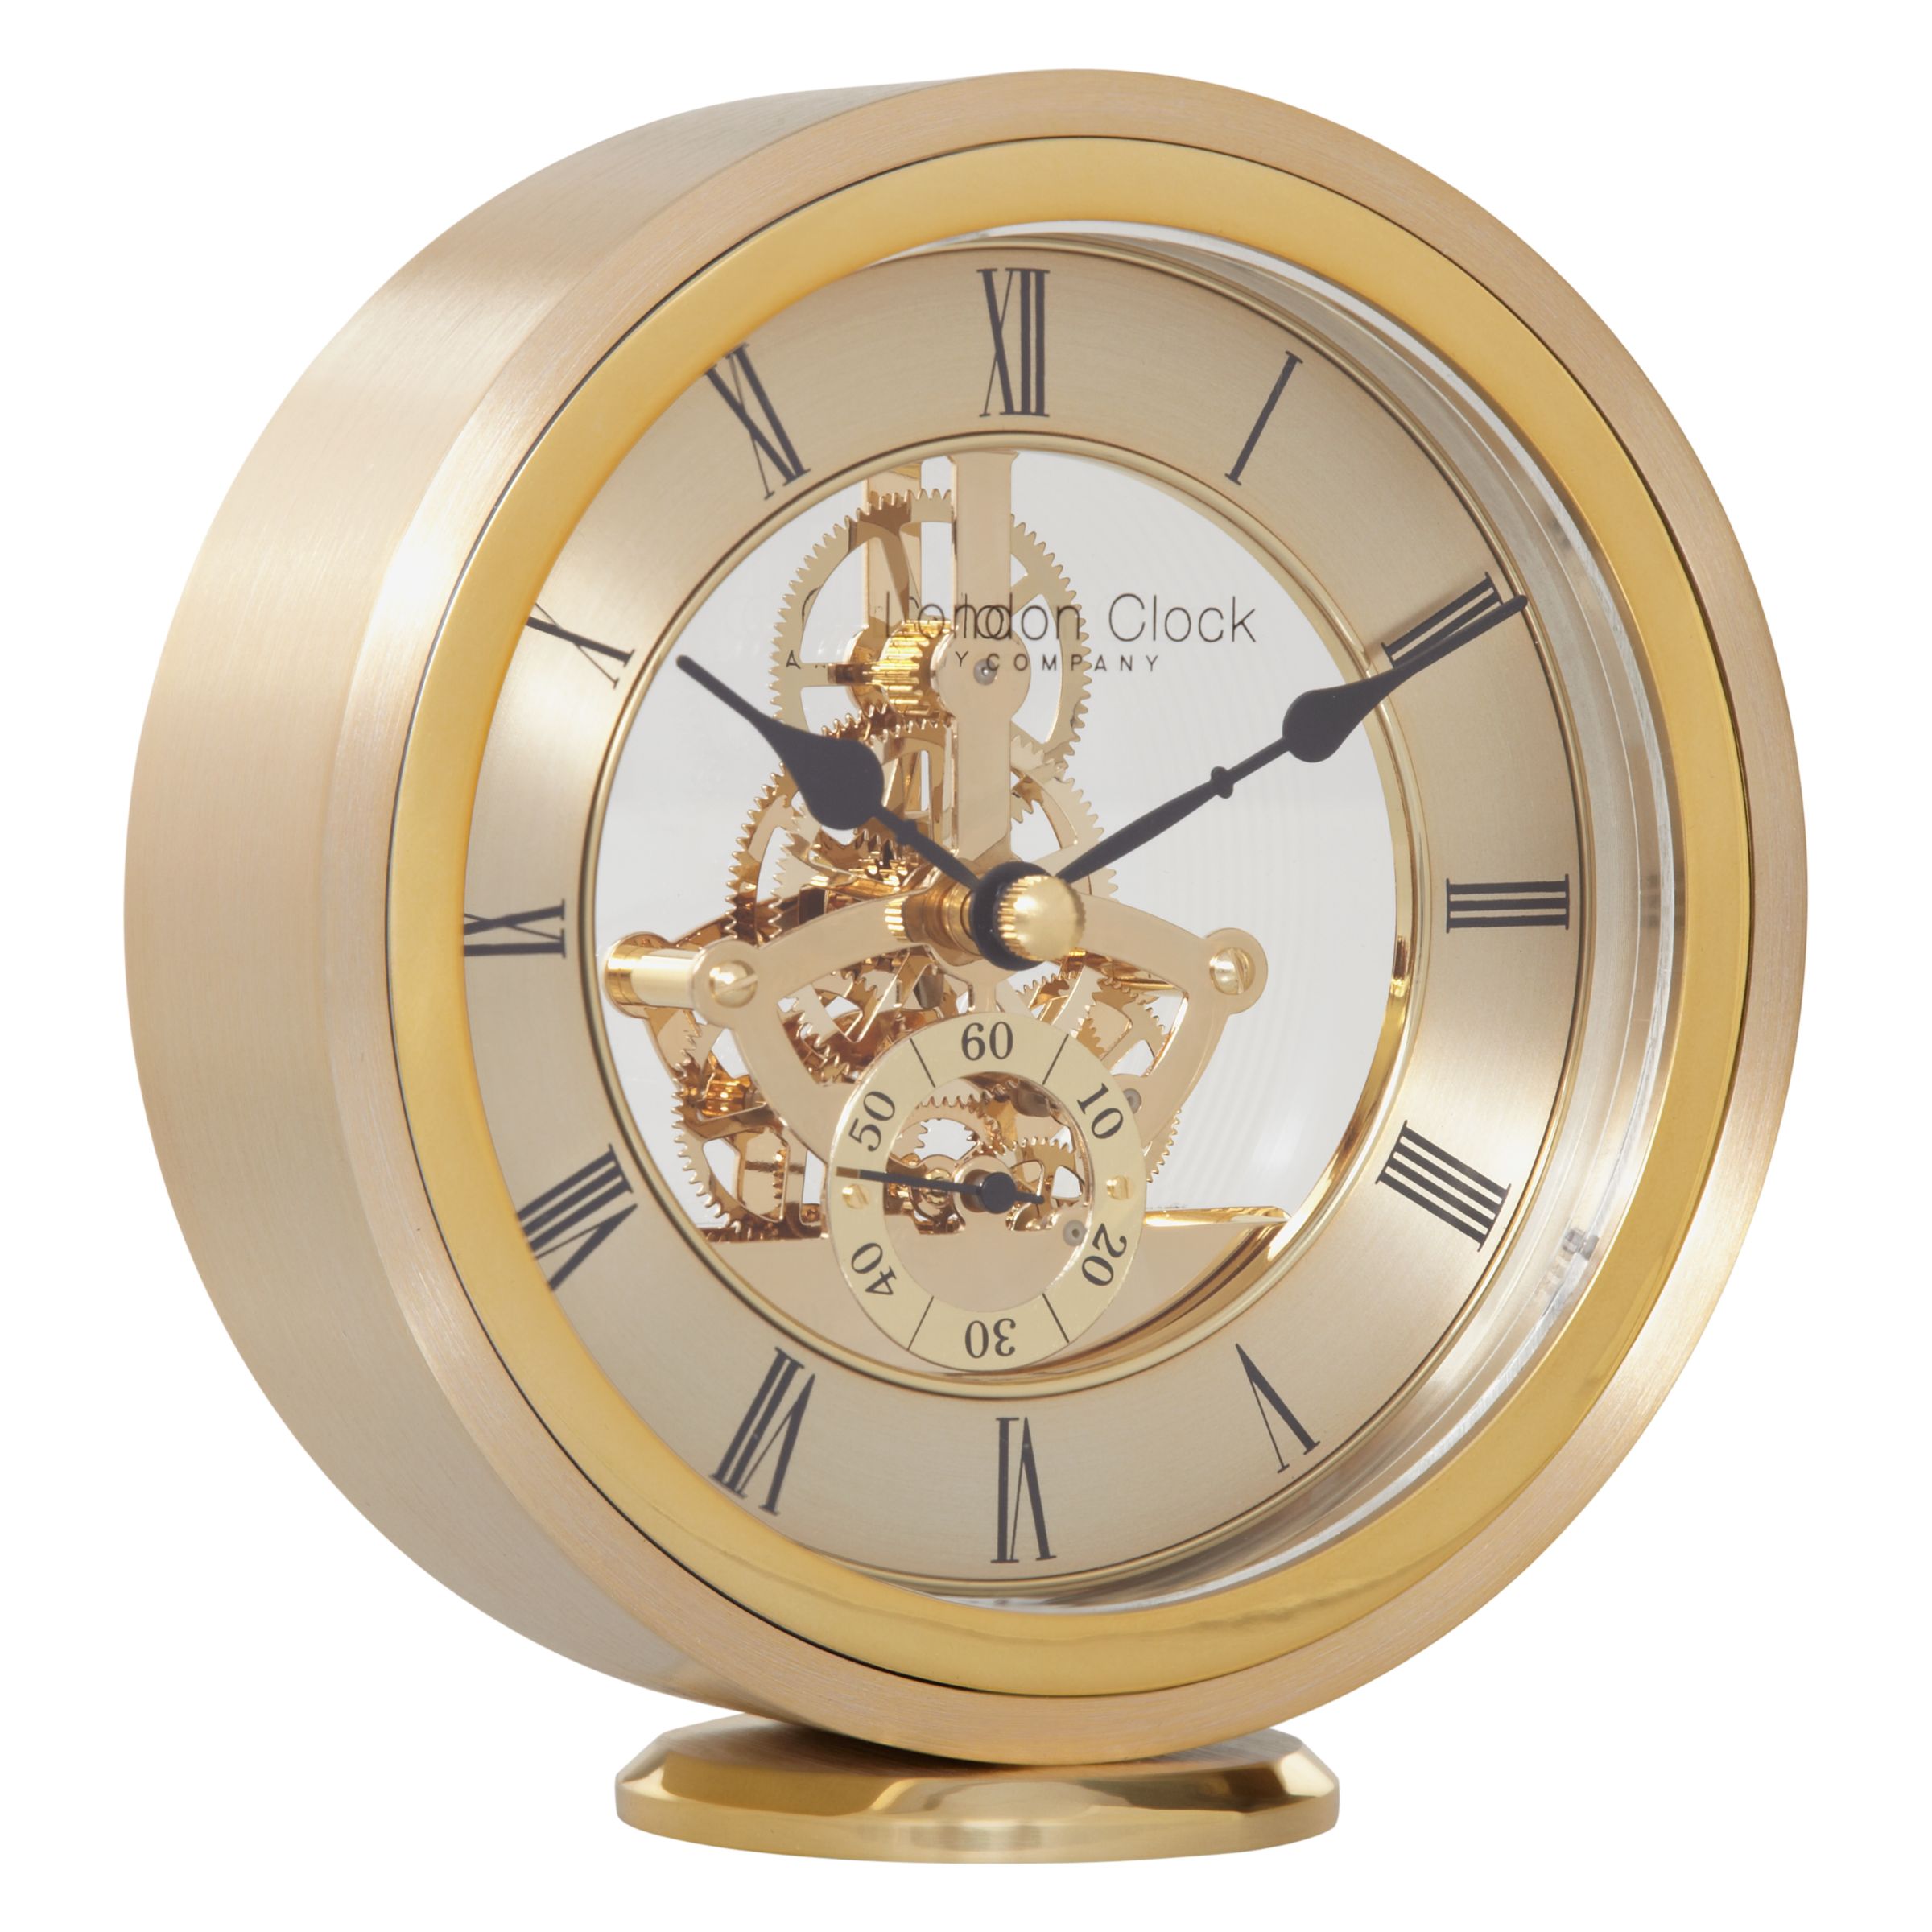 London Clock Company Round Carriage Clock, Gold